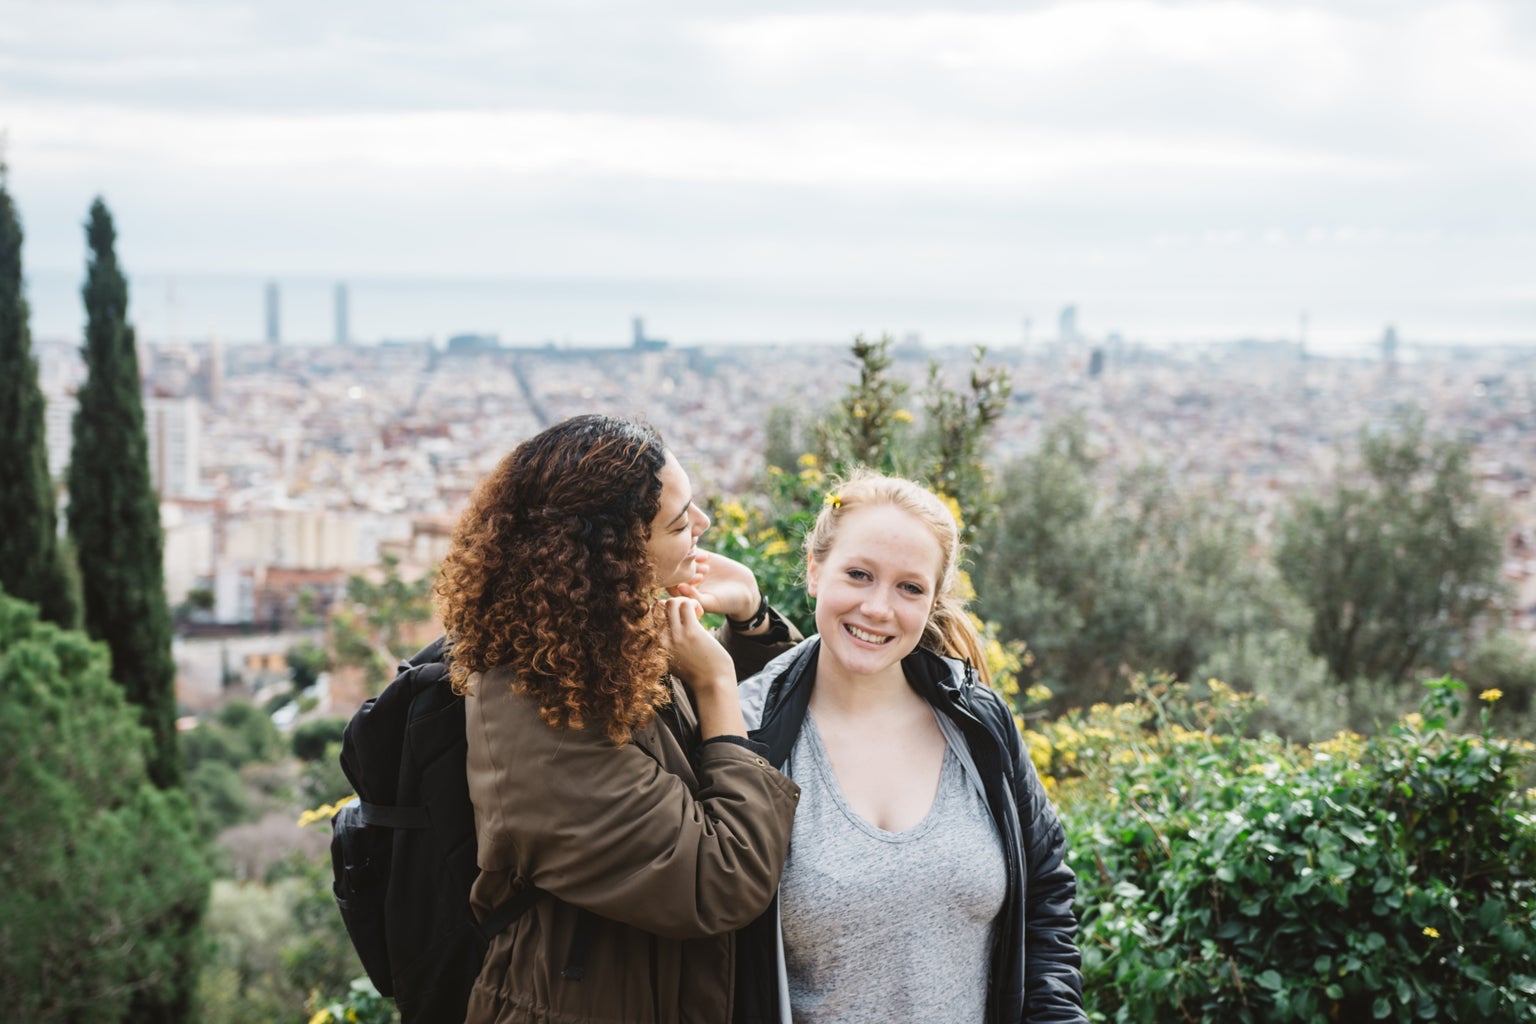 spain barcelona abroad europe girls firneds smile flowers landscape travel